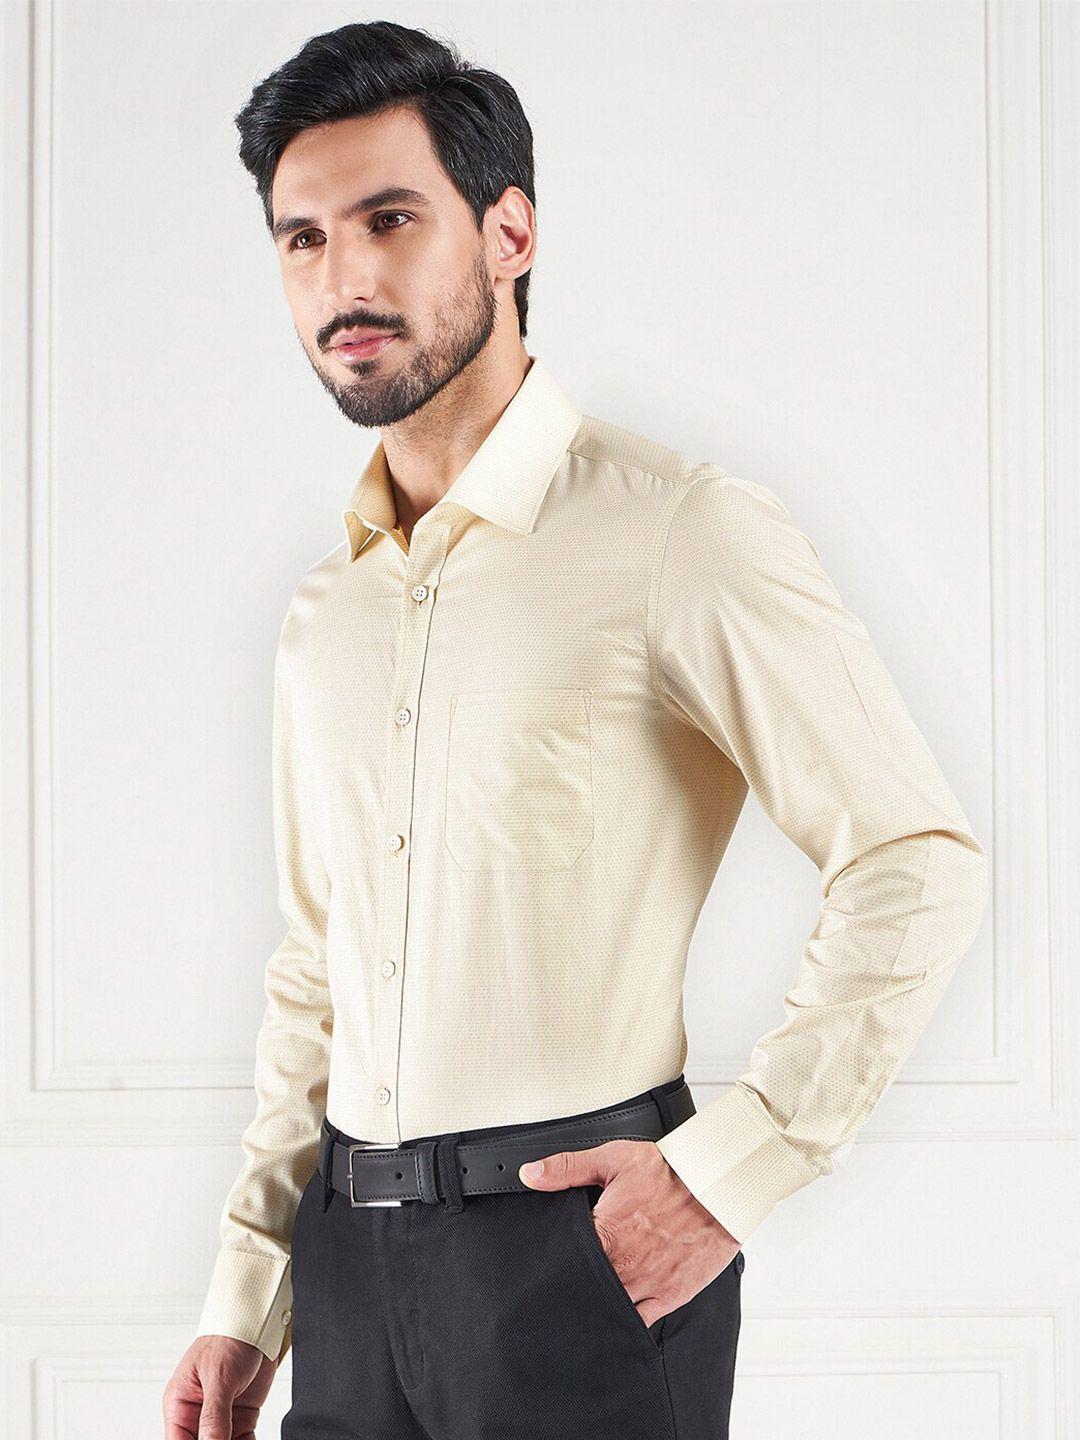 louis-stitch-cotton-comfort-opaque-formal-shirt